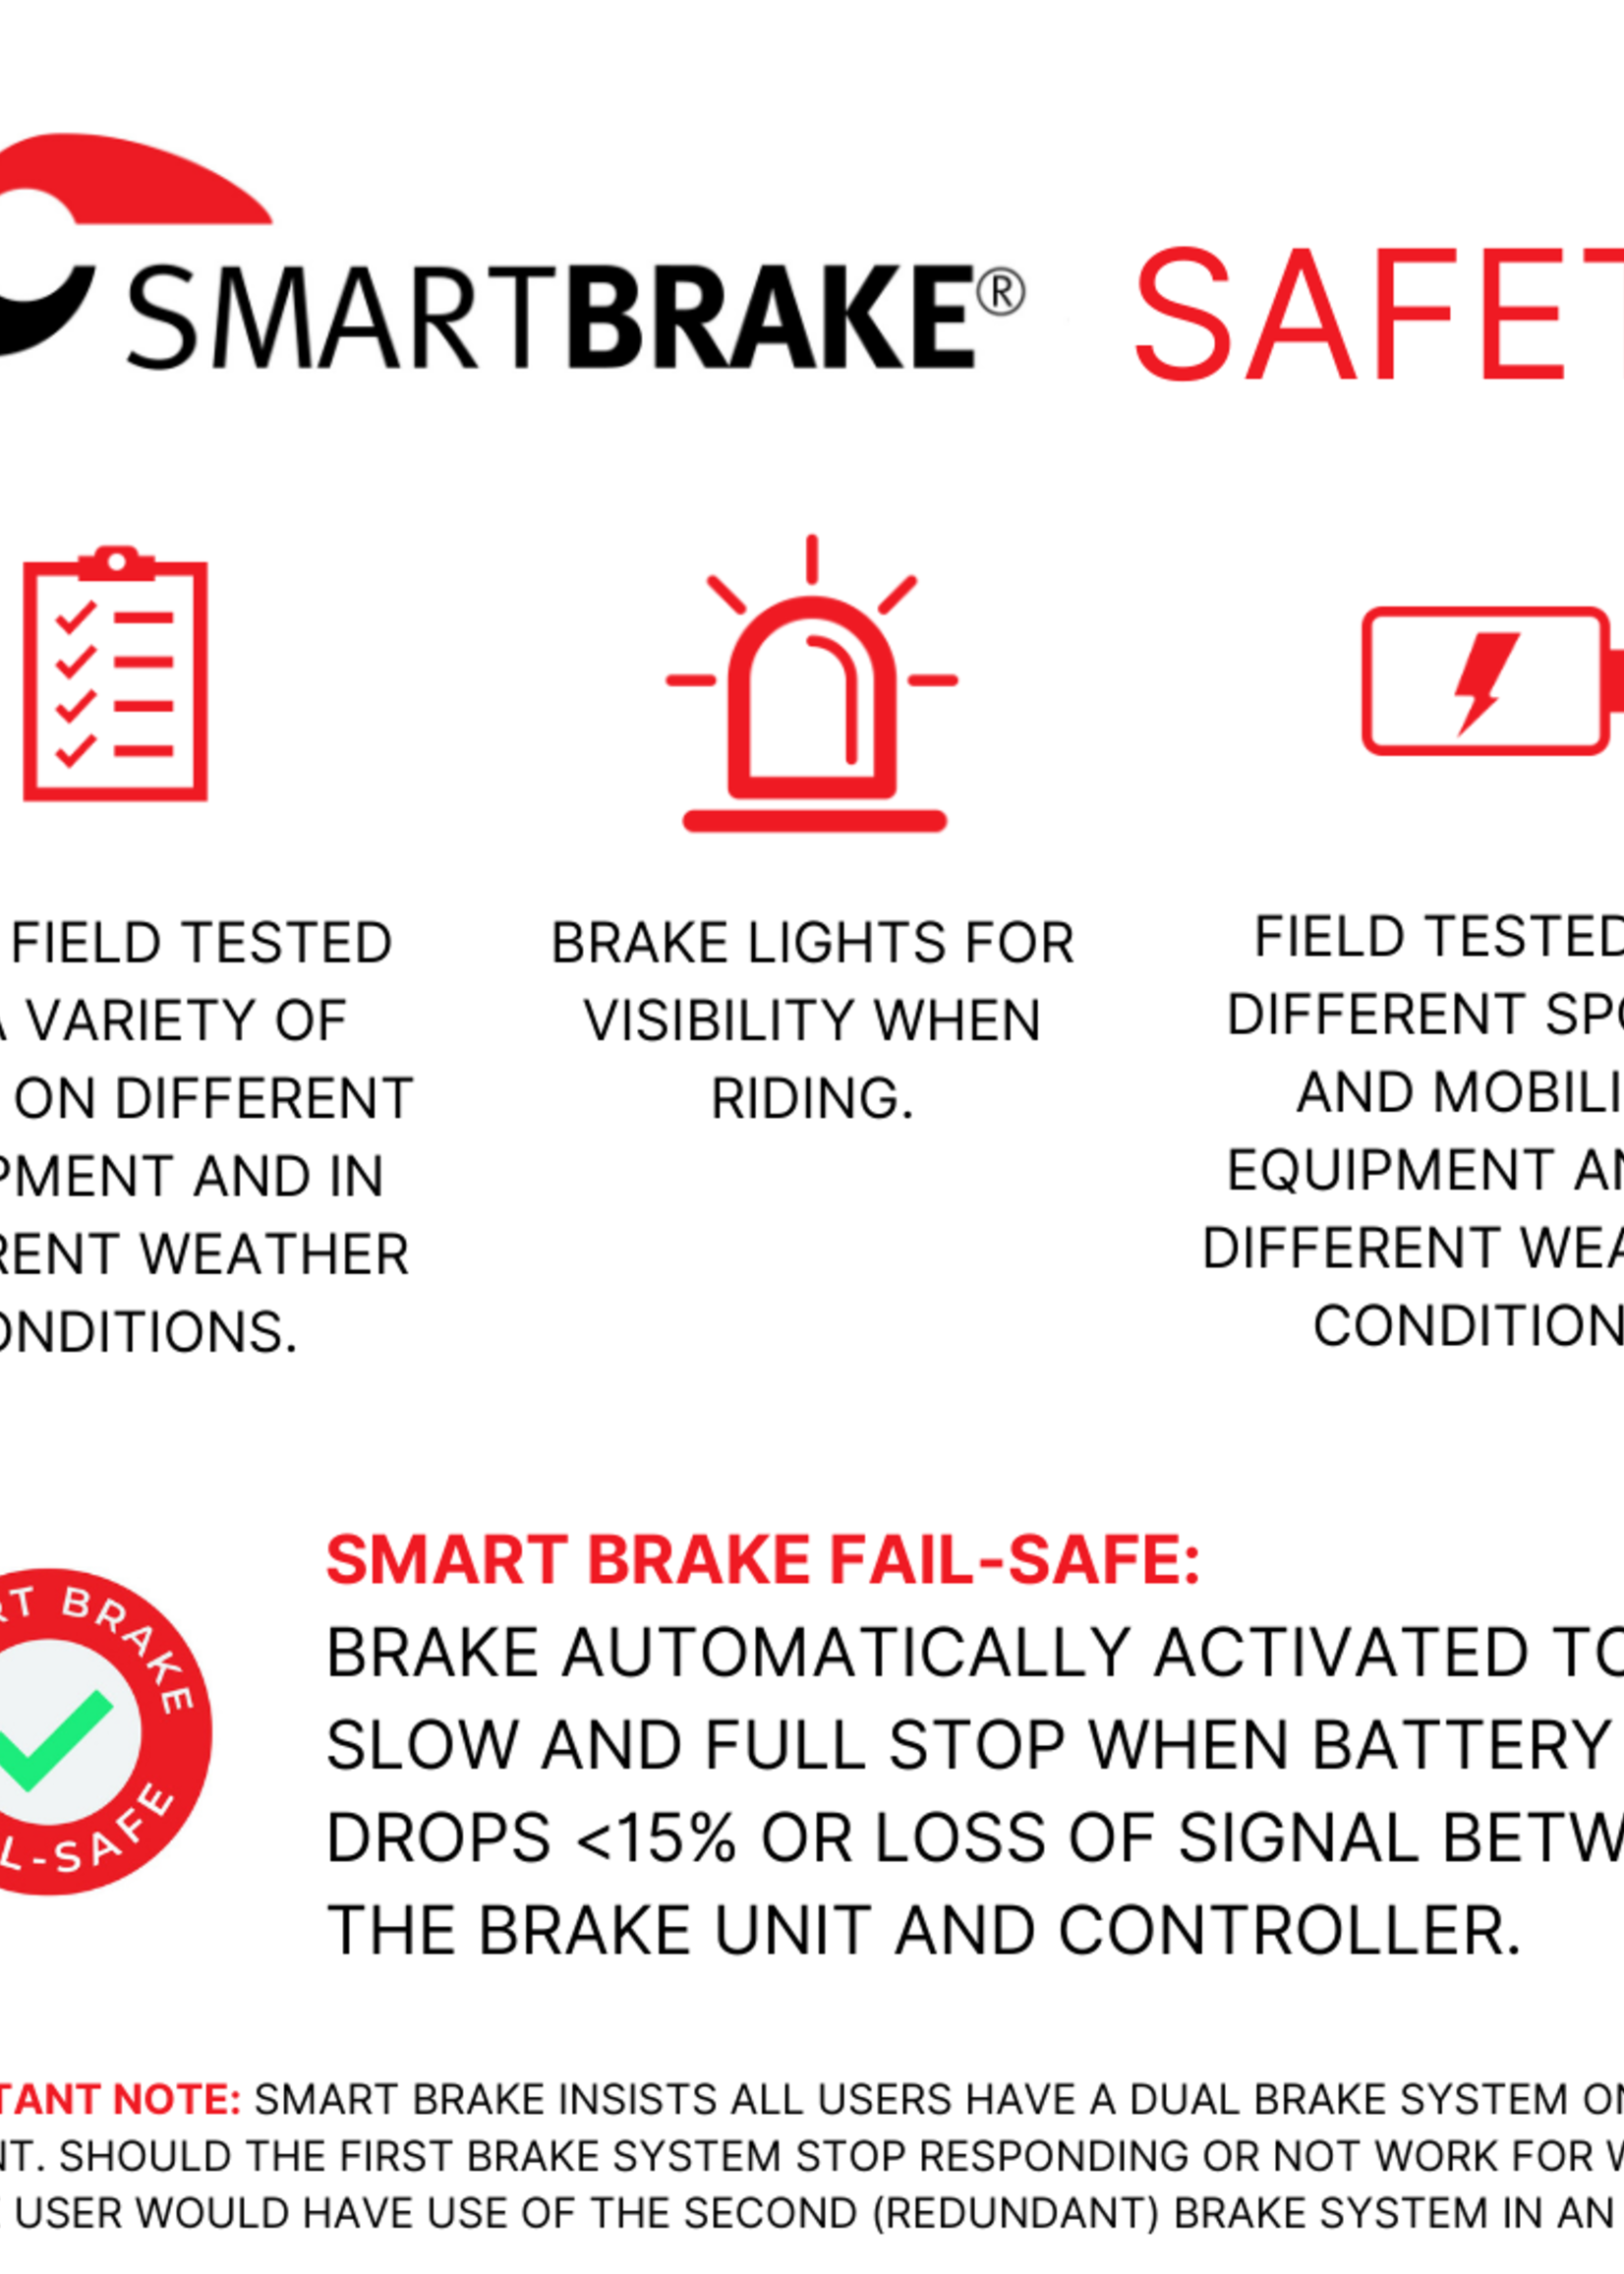 Smart Brake Smart Brake 1x1 Kit: Rim + Brake Lever